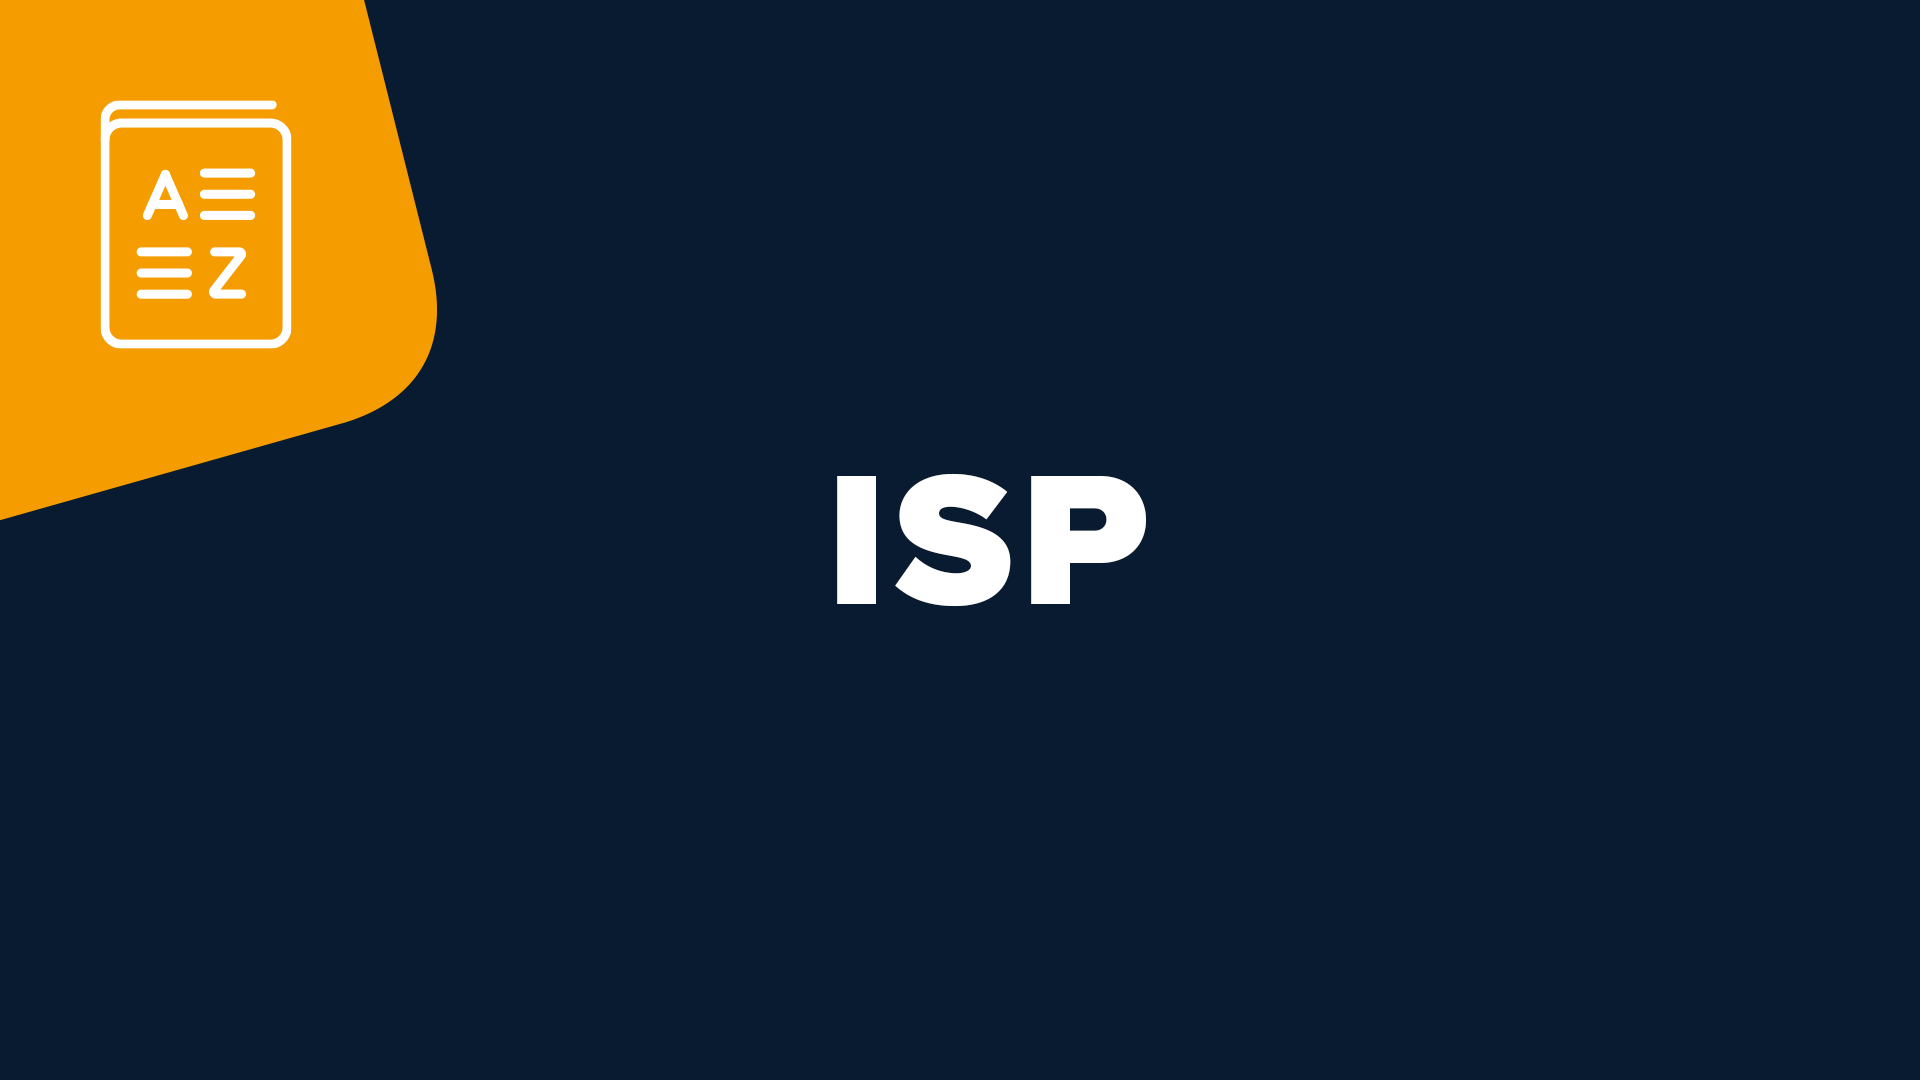 internet service provider (isp) glossareintrag